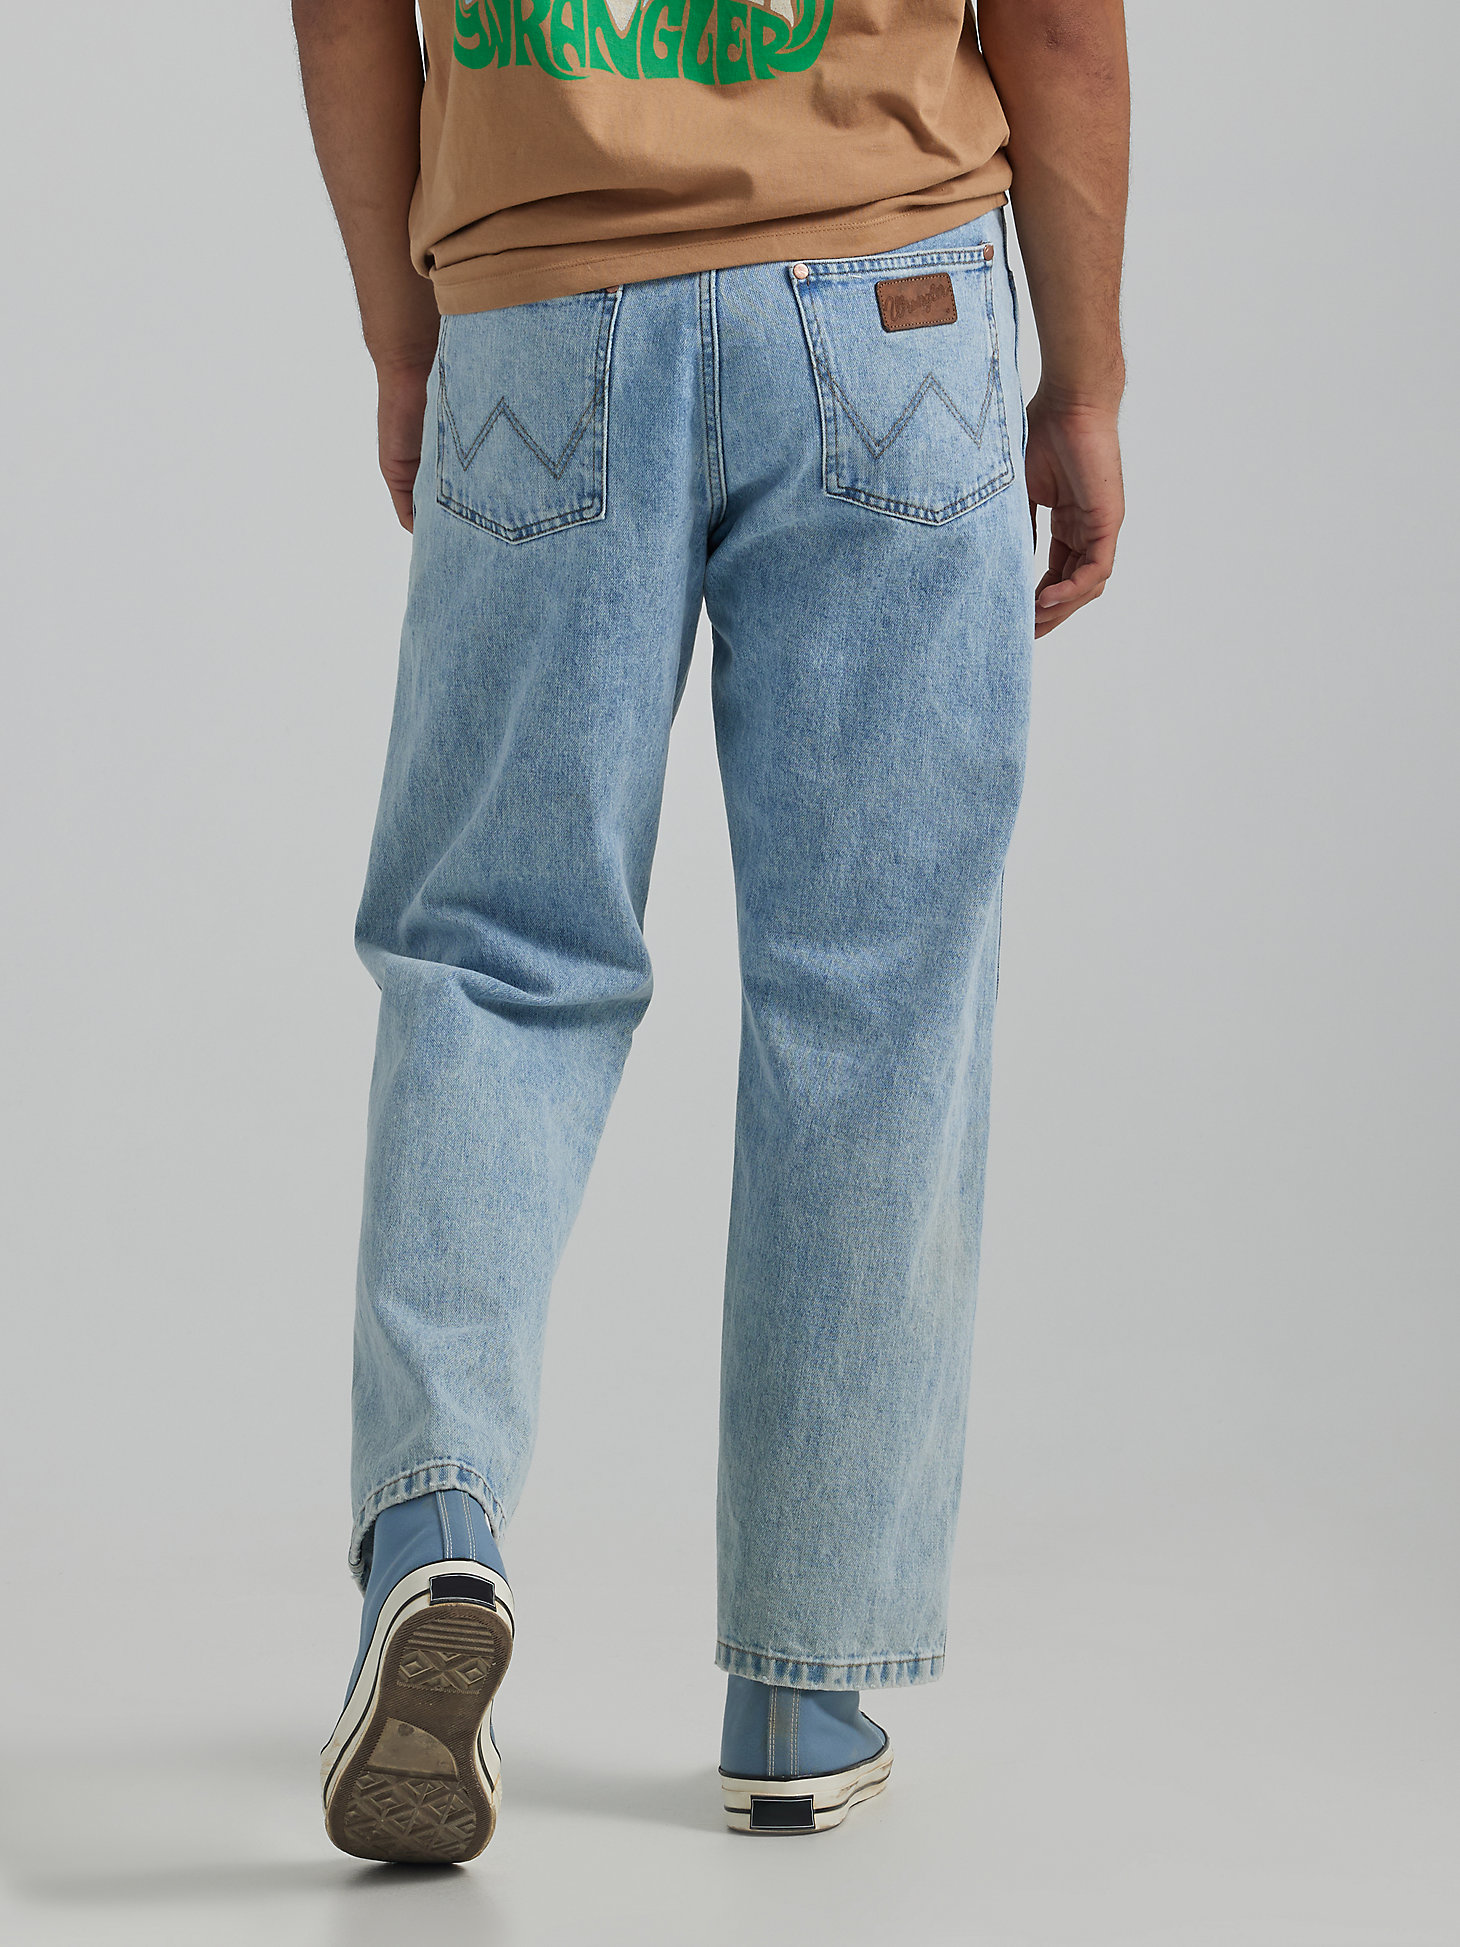 Men's Wrangler® Heritage Redding Loose Fit Jean in Ripped Light Wash alternative view 1